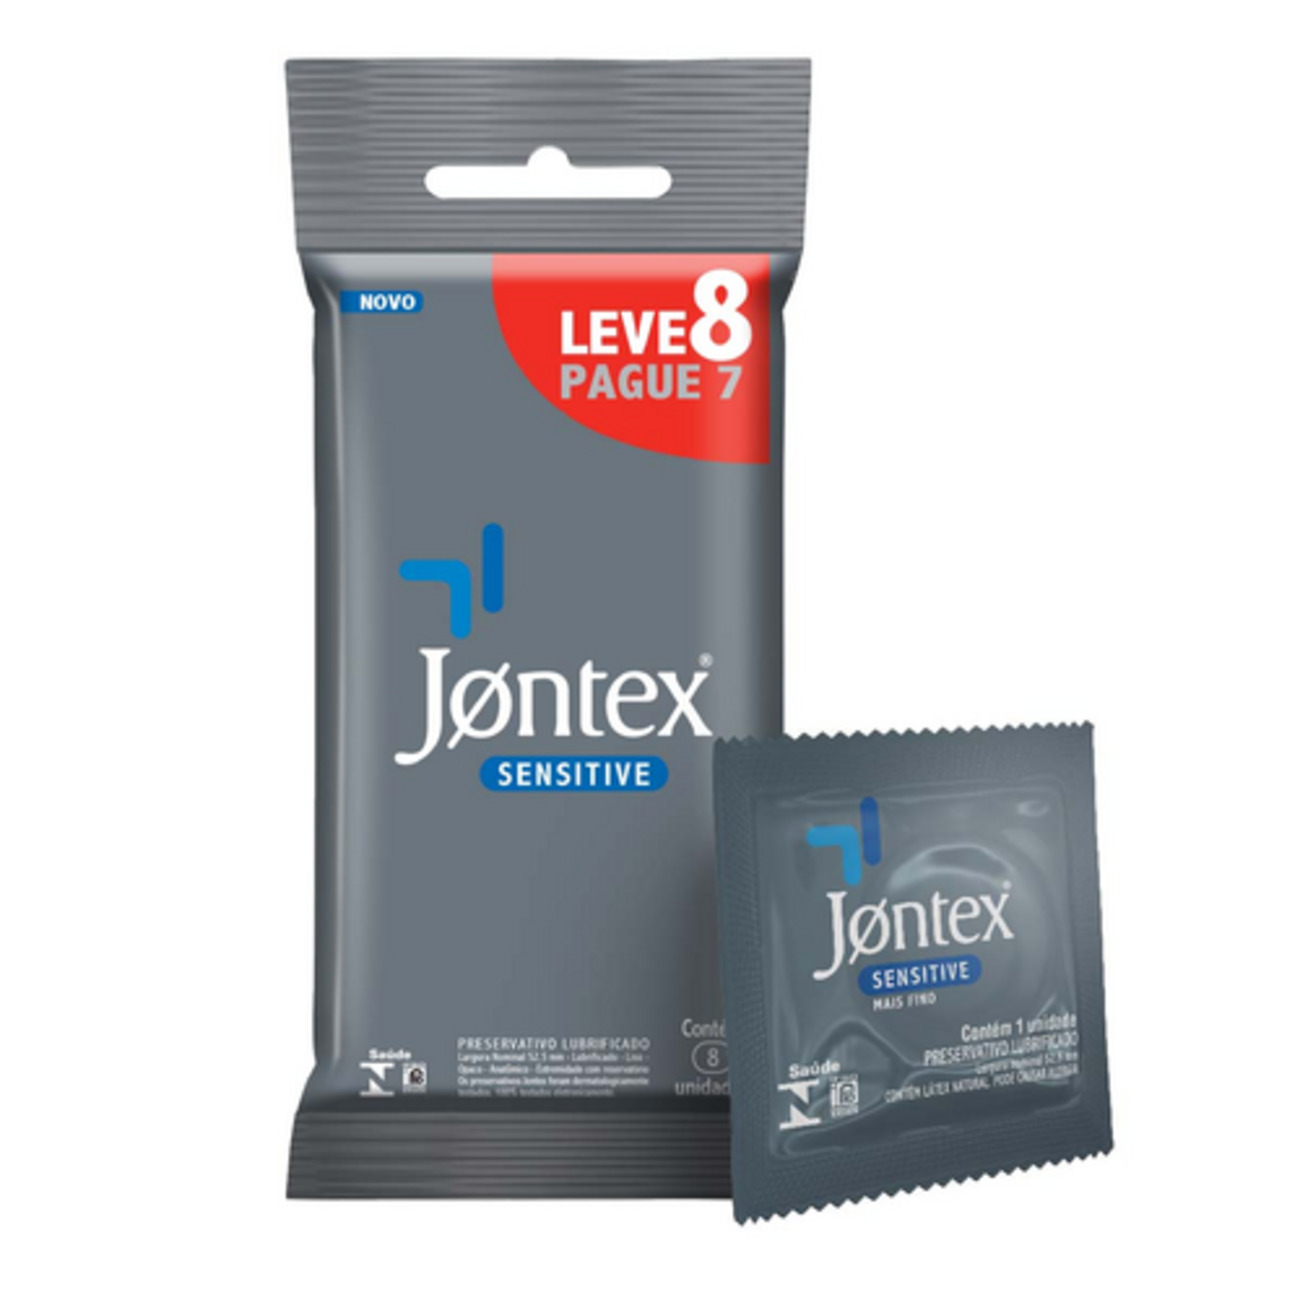 Camisinha Jontex Sensitive - Leve 8 Pague 7 Unidades